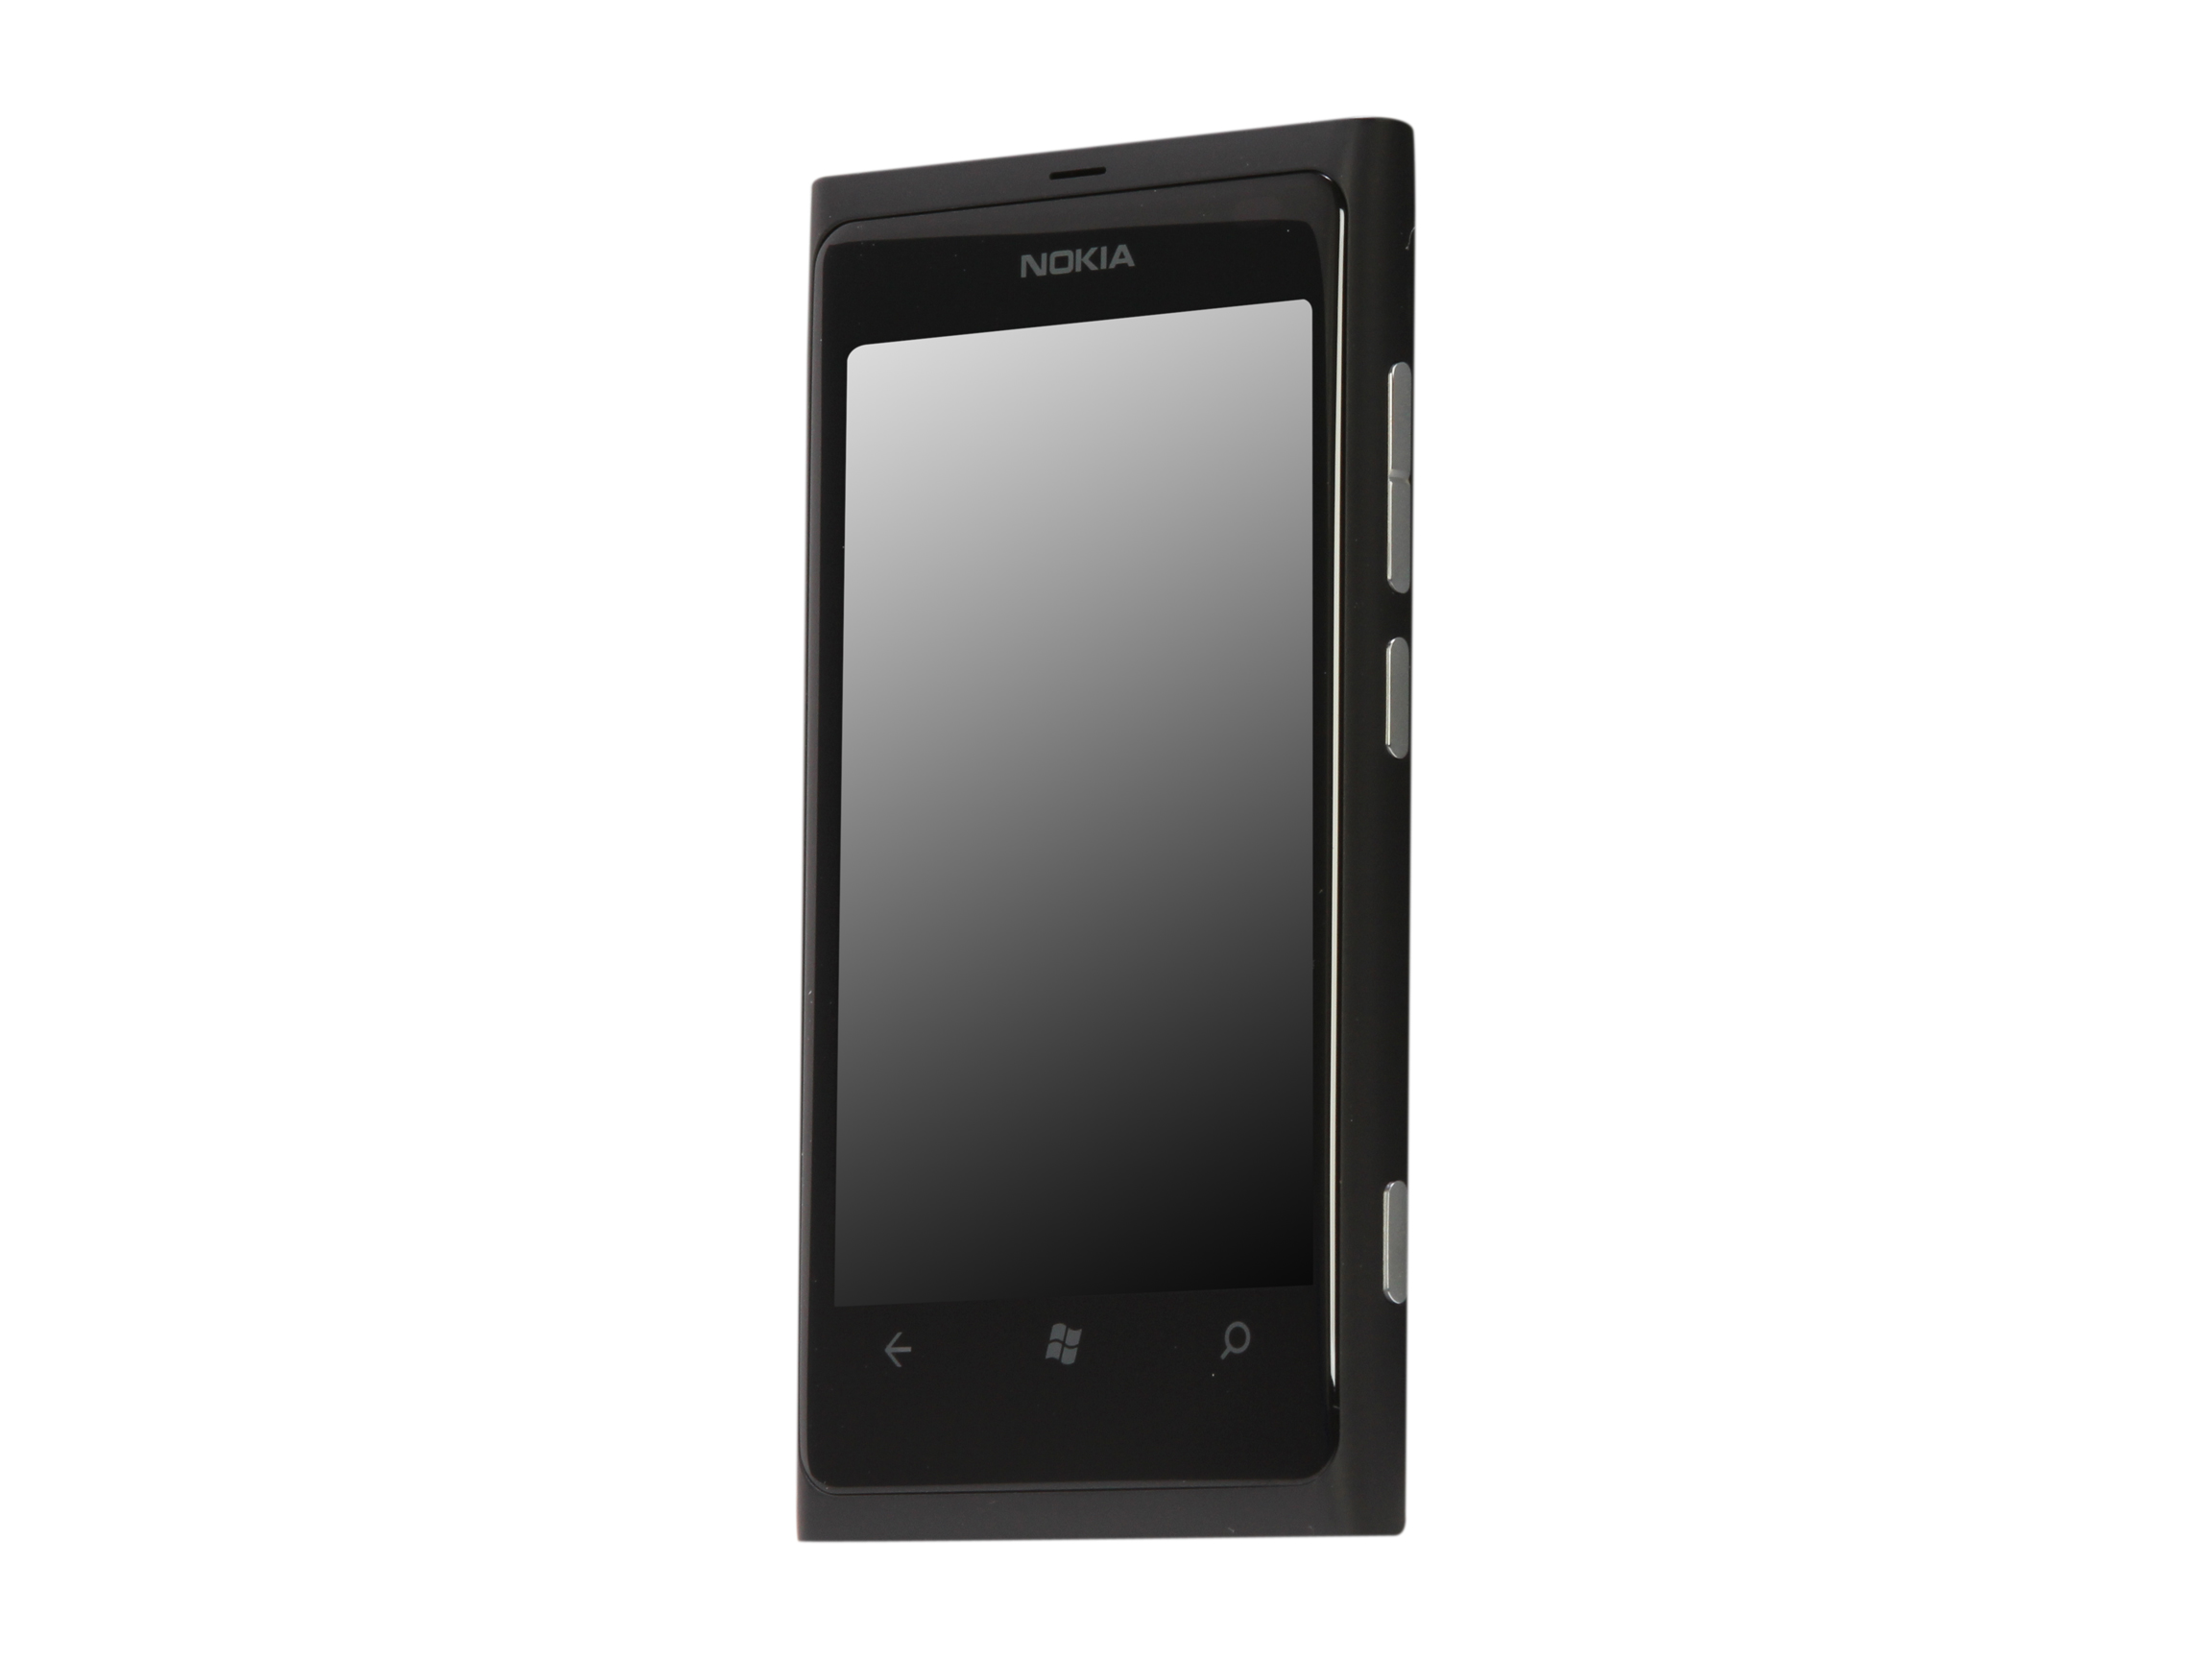 Nokia Lumia 800 Black 3G Single Core 1.4GHz 16GB Unlocked GSM Windows Smart Phone w/ Windows Phone 7.5 Mango / 8 MP Camera